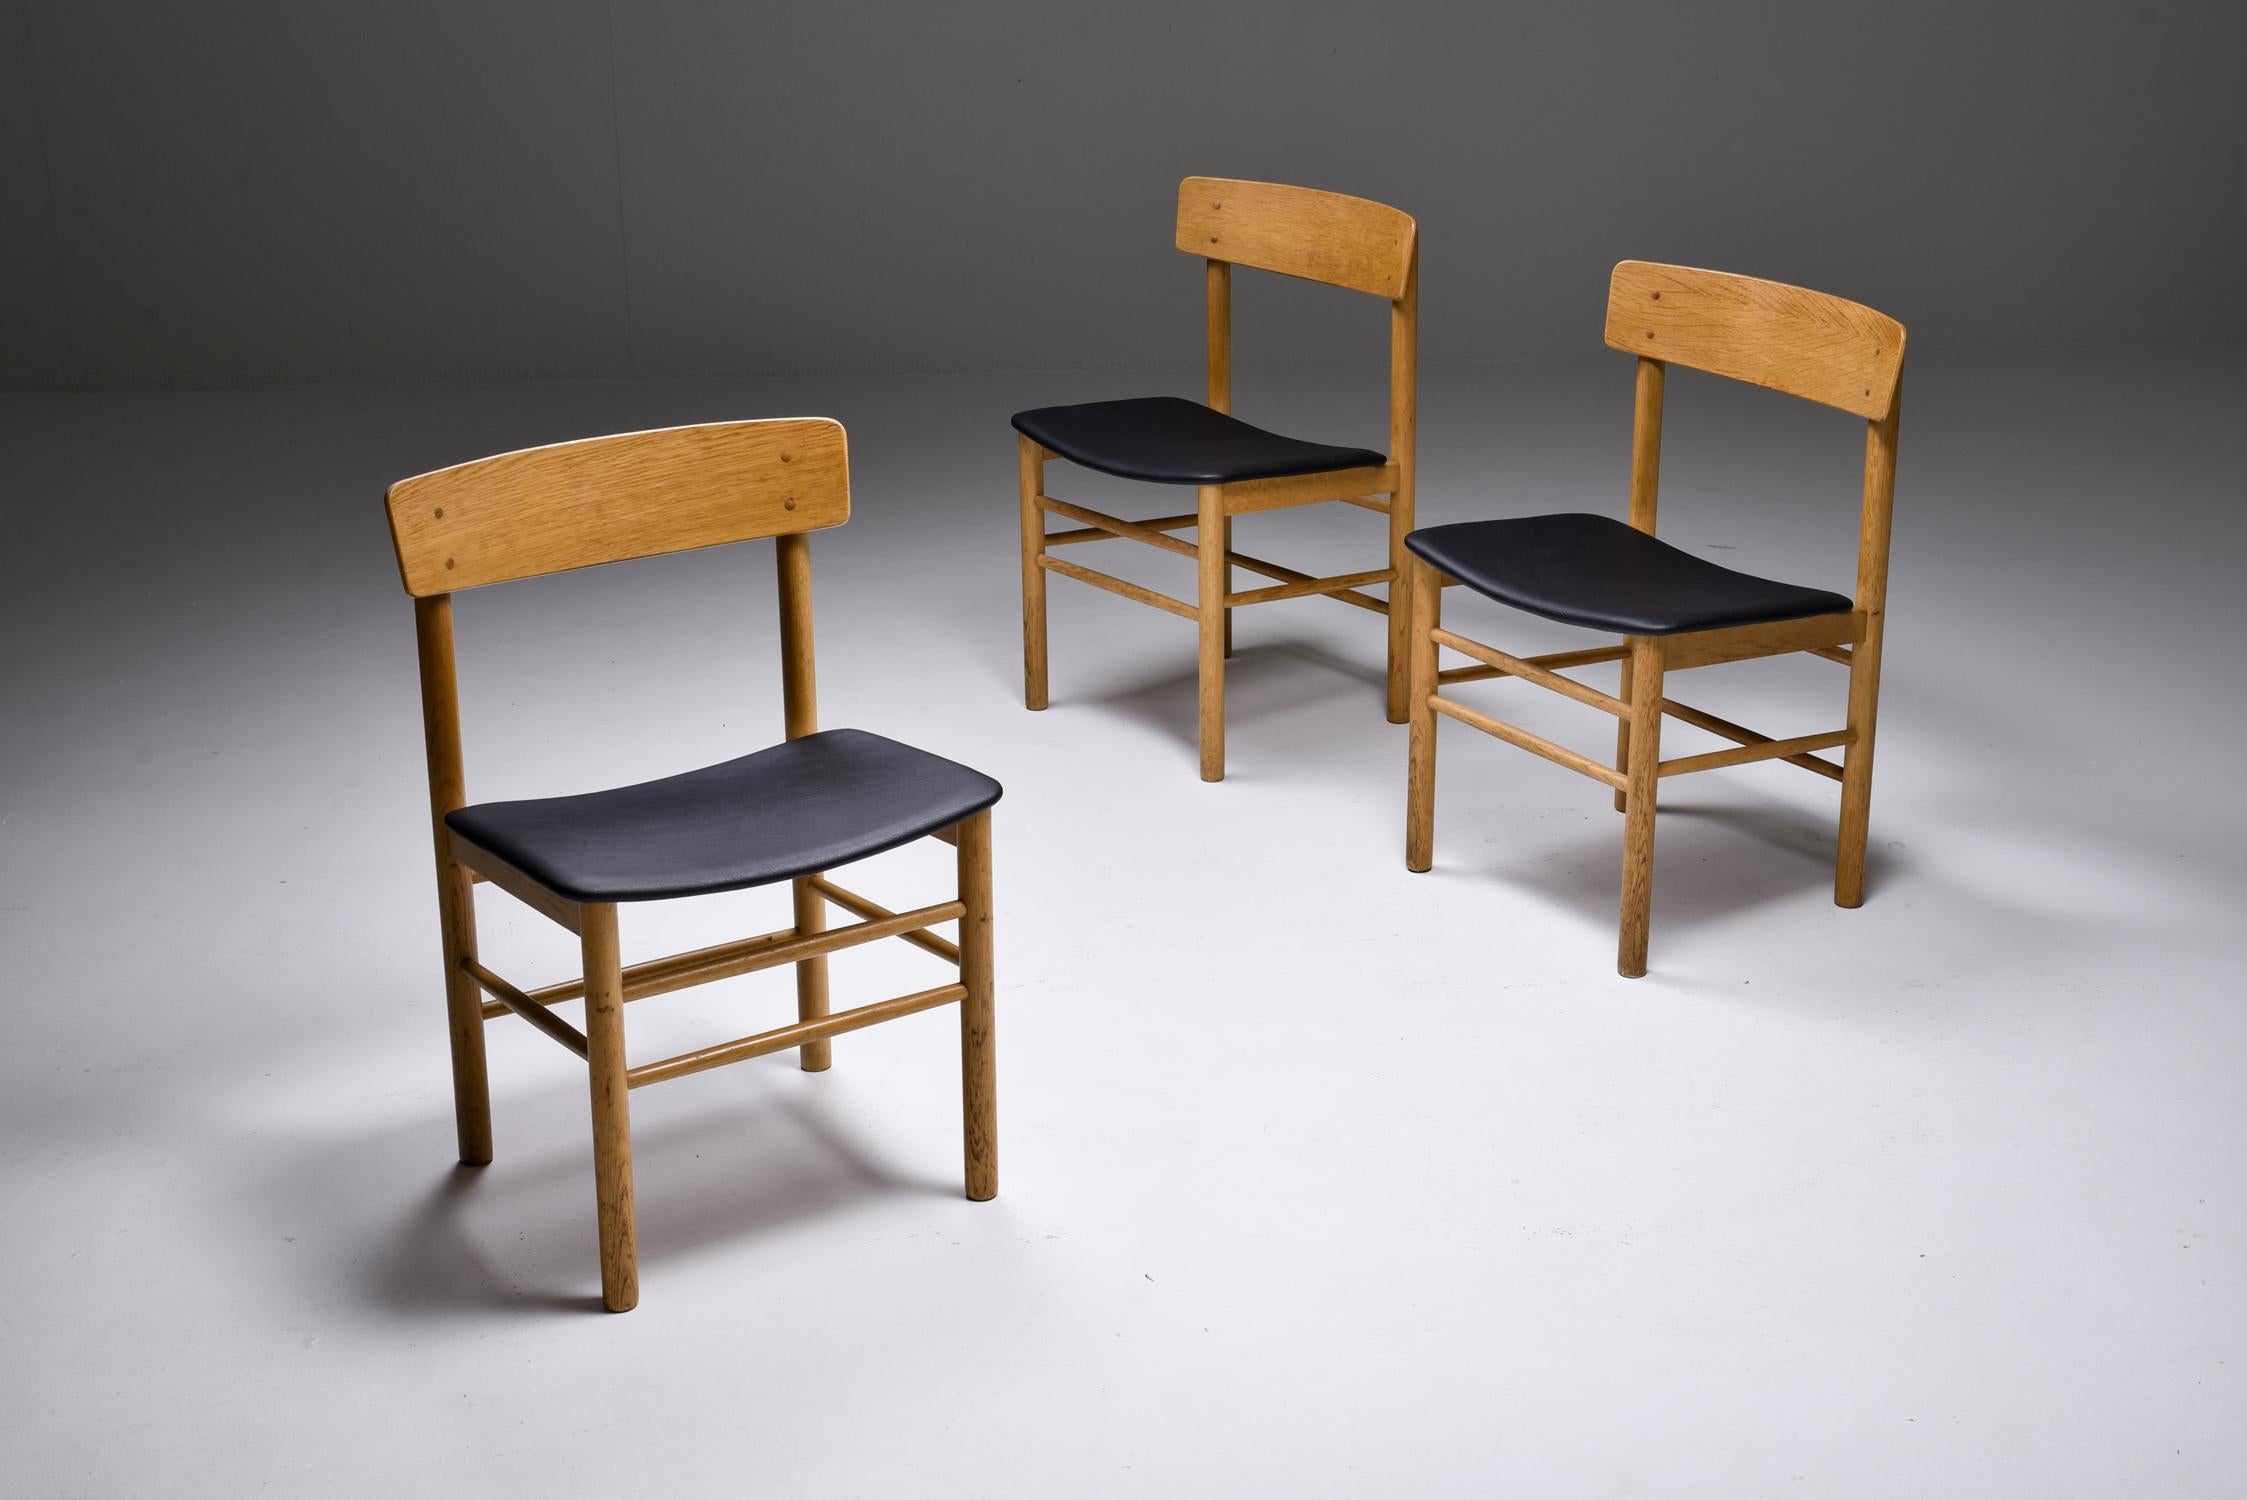 Scandinavian modern, Børge Mogensen, Fredericia Stølefabrik, Denmark, 1956.

Danish modern dining chairs in soap-treated oak with seats in leather. This model 3236 chair was designed by Børge Mogensen in 1956 for Fredericia Stølefabrik. The chairs